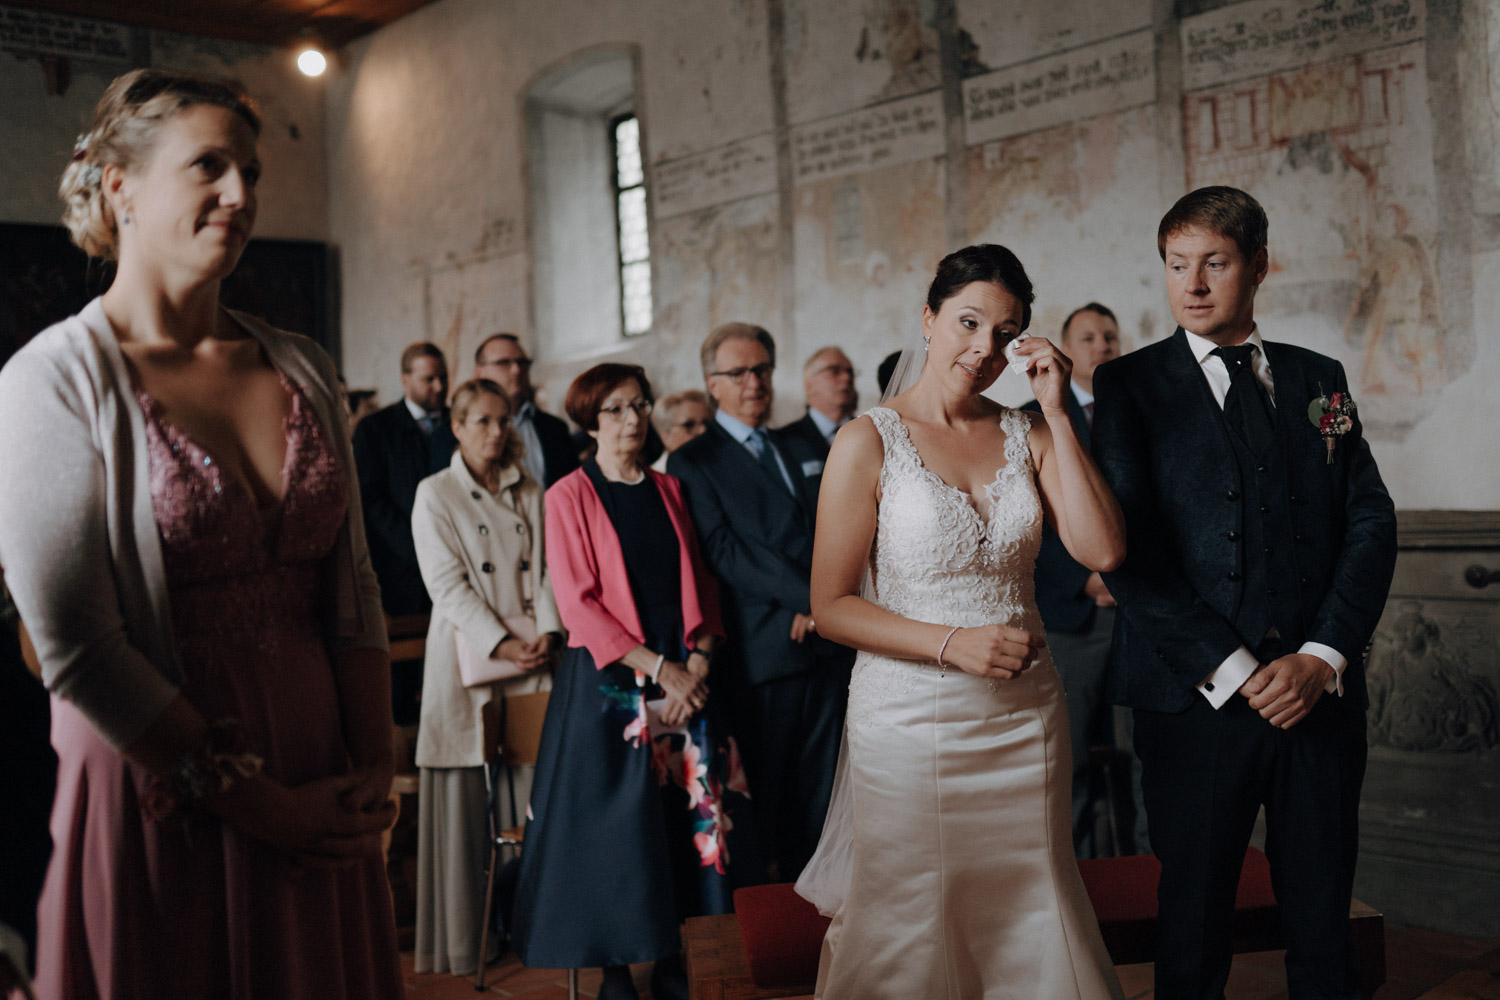 Wedding photographer in chapel Ennetbürgen Villa Honegg wedding